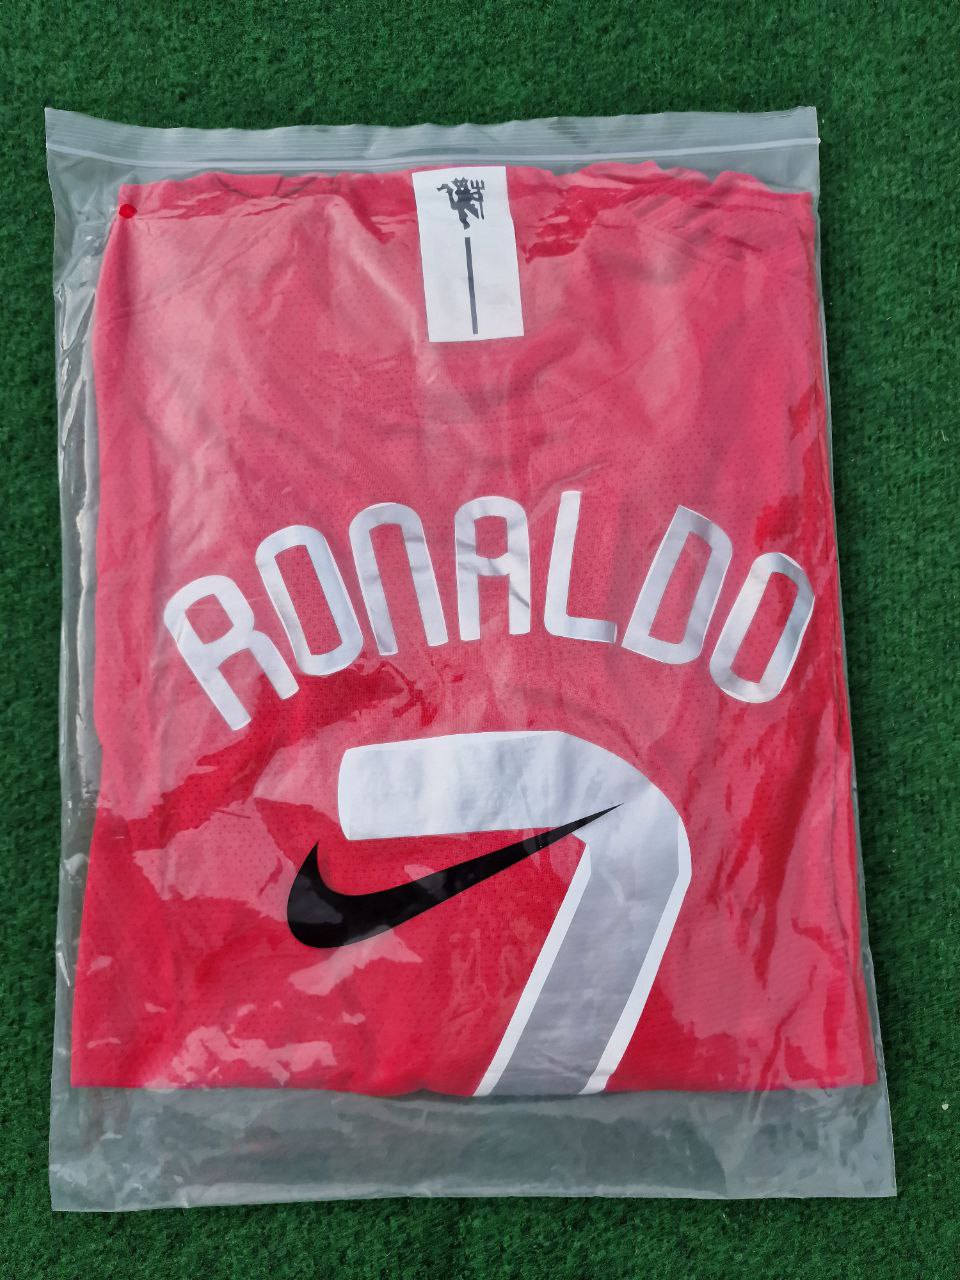 Cristiano Ronaldo Manchester United Retro Long Sleeve Jersey